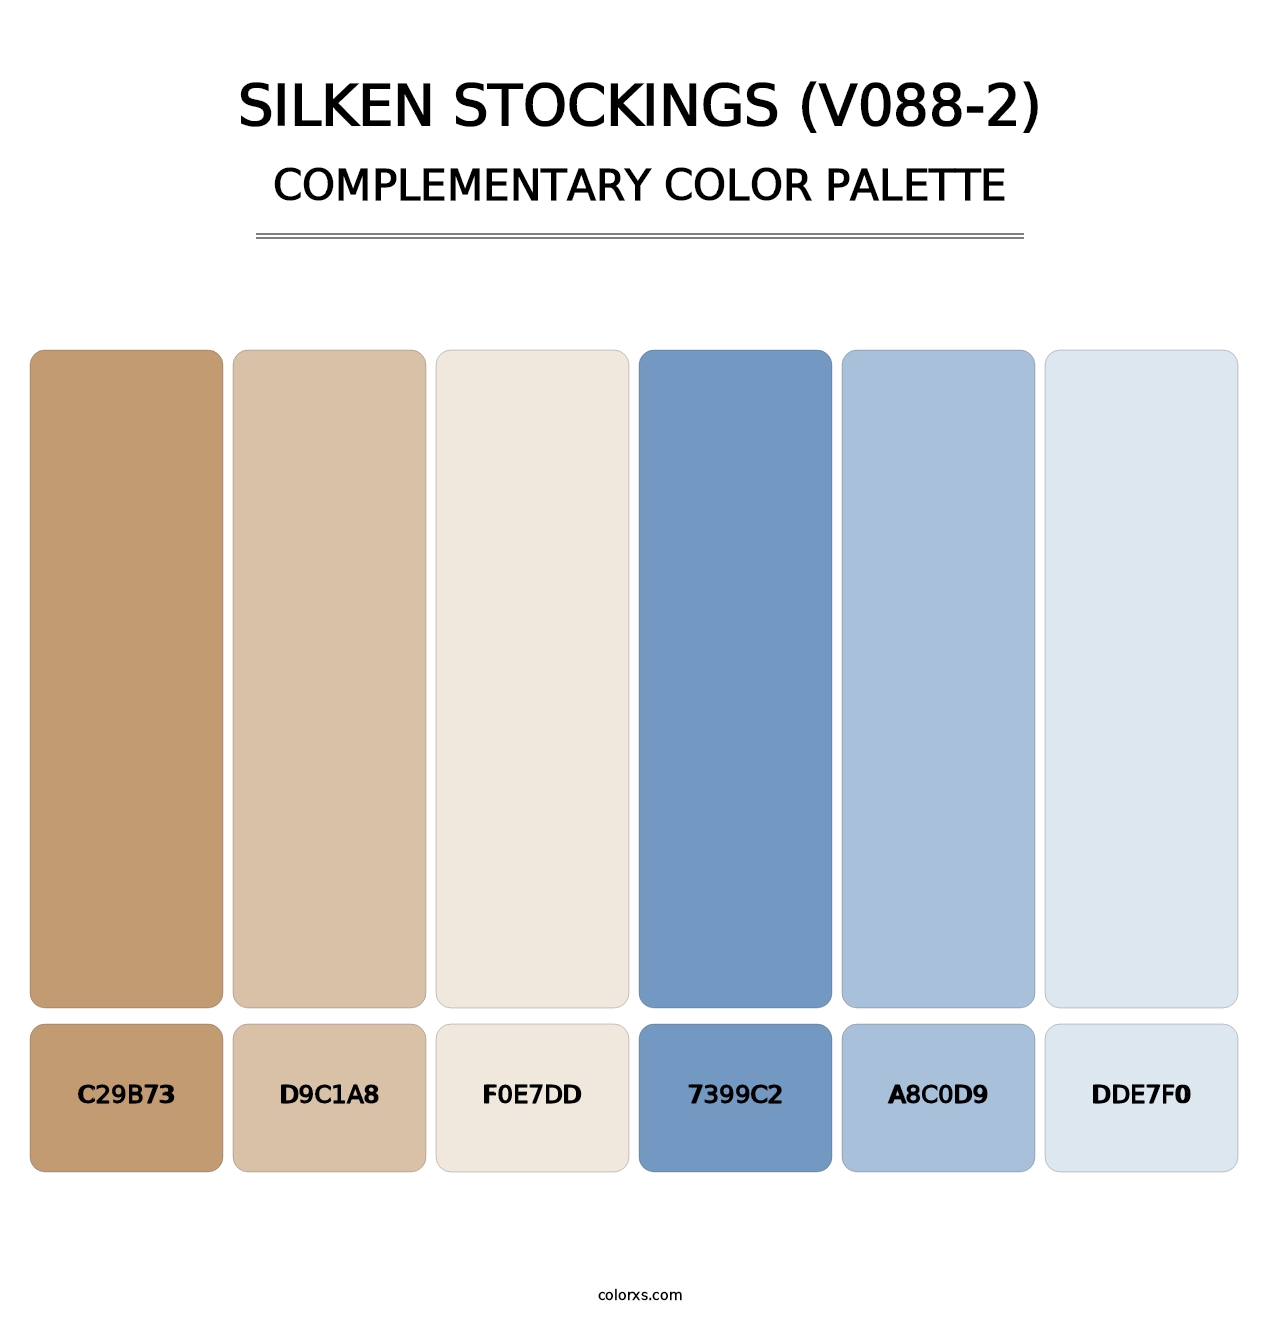 Silken Stockings (V088-2) - Complementary Color Palette